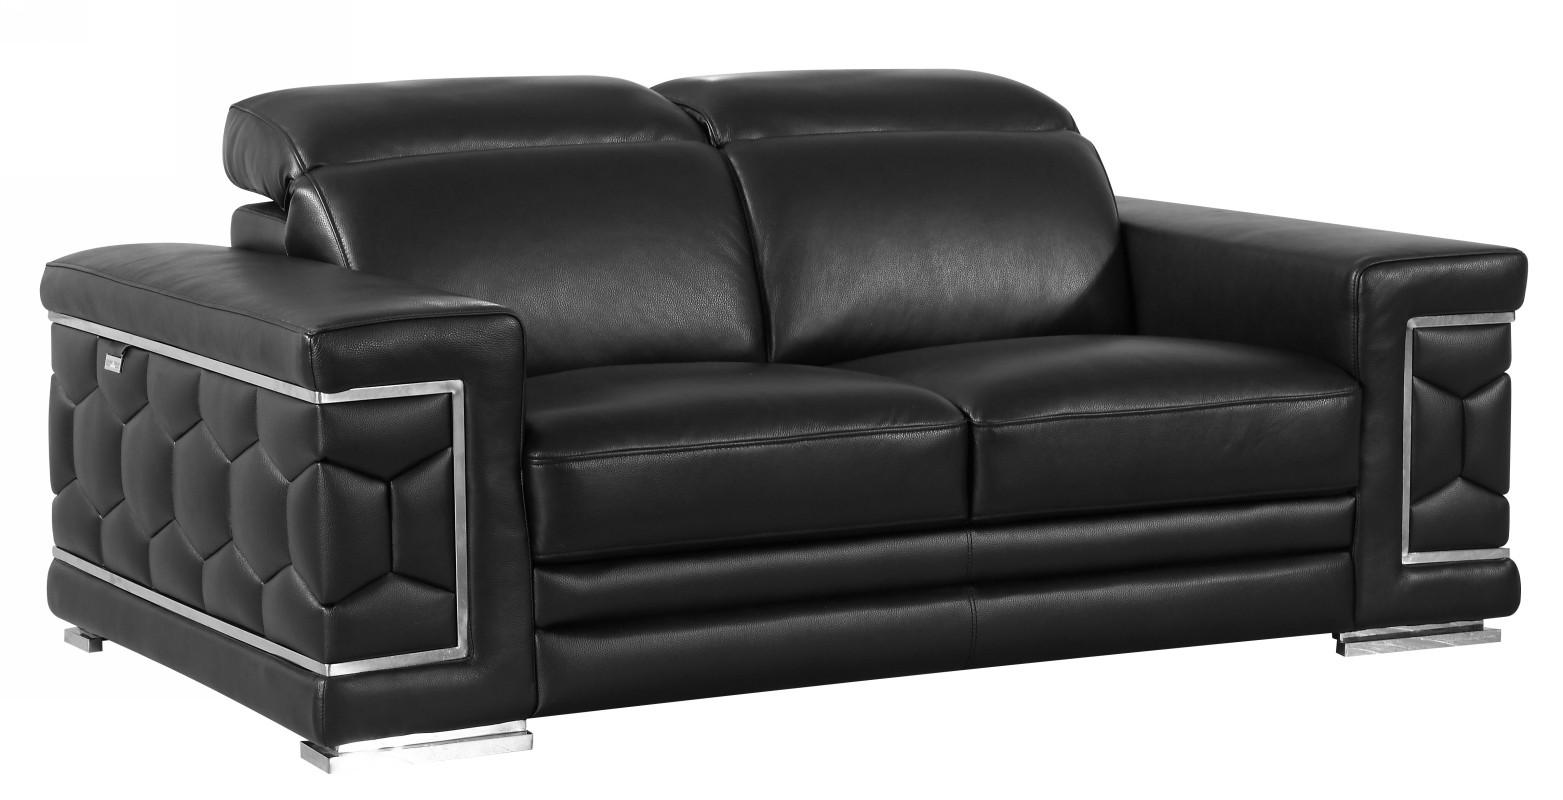 

    
Orren Ellis Hawkesbury Common Sofa Loveseat and Chair Set Black SKU: ORNL4862
